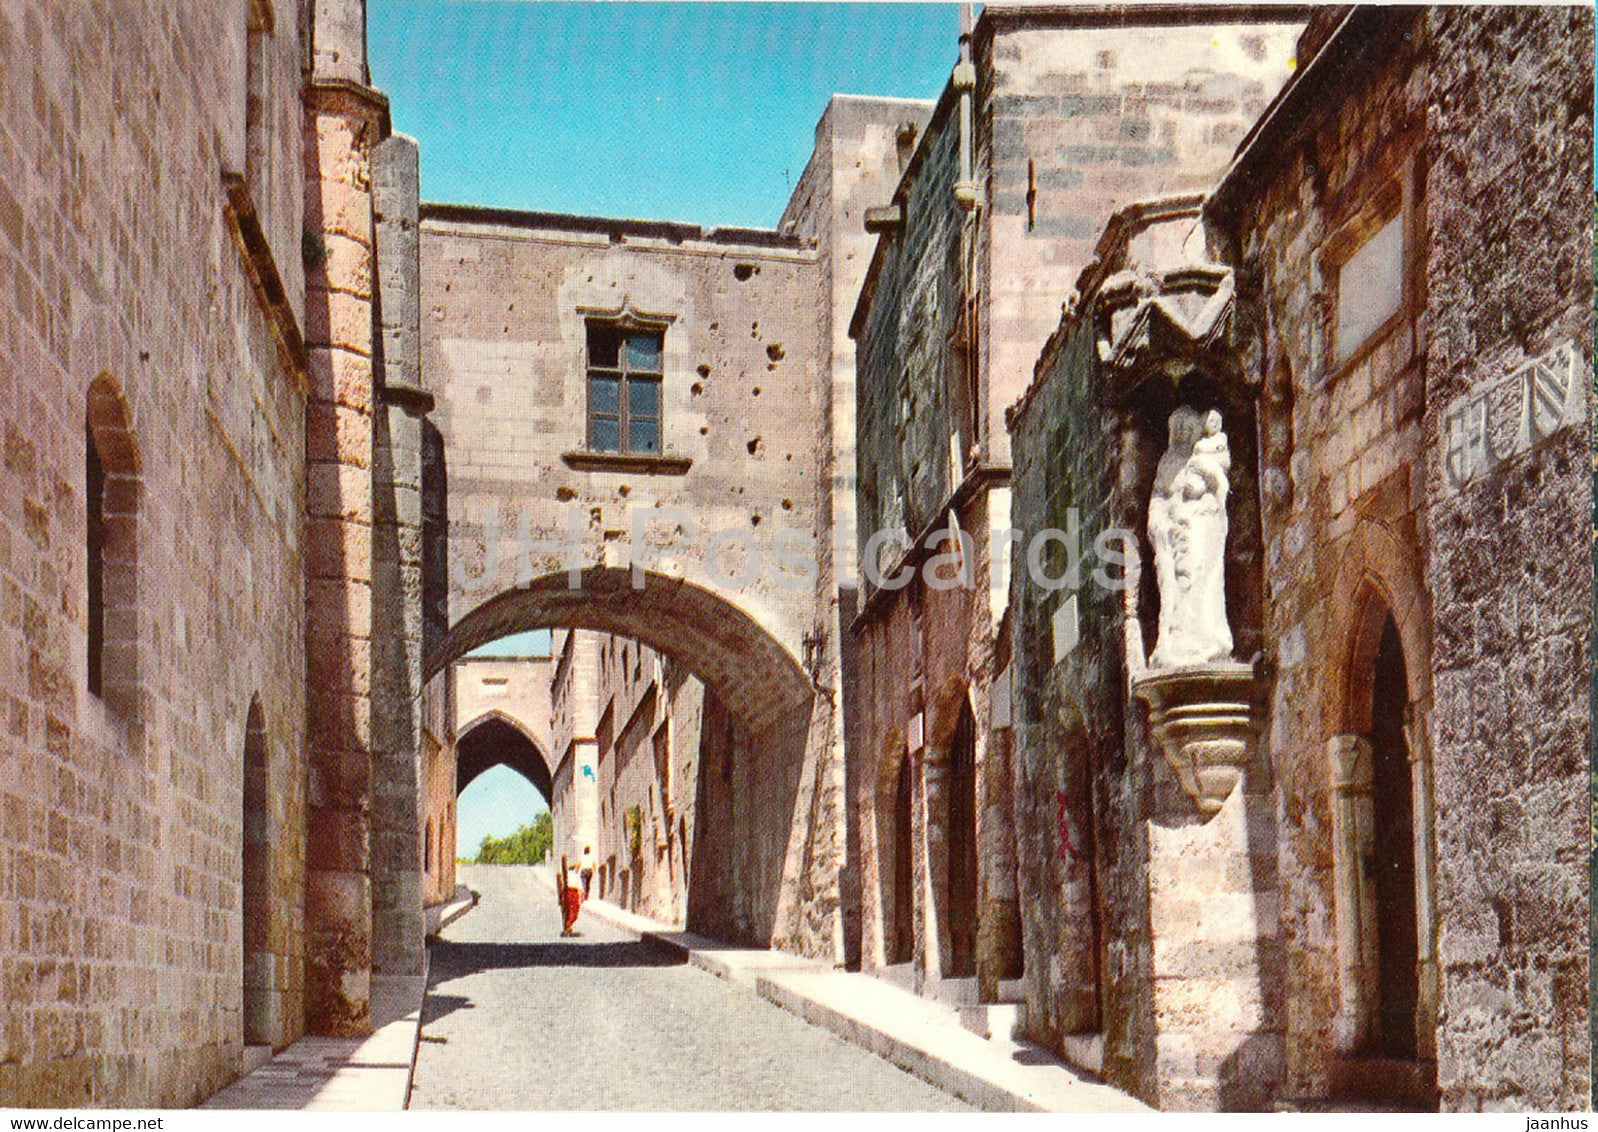 Rhodos - Rhodes - Street of the Knights - Greece - unused - JH Postcards